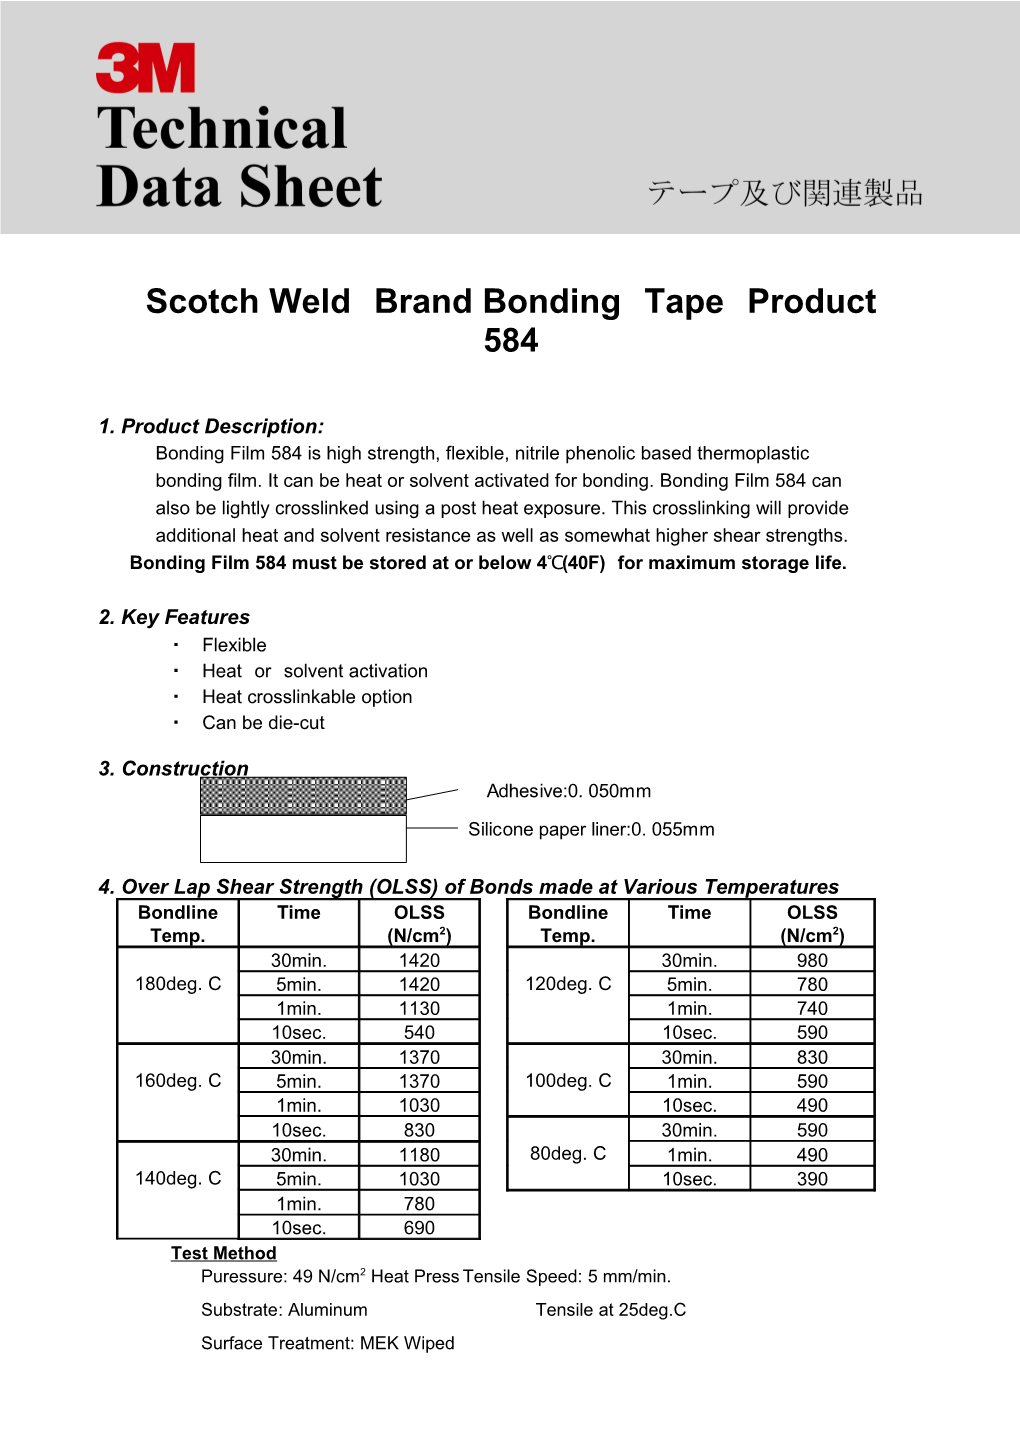 Scotch Weld Brand Bonding Tape Product